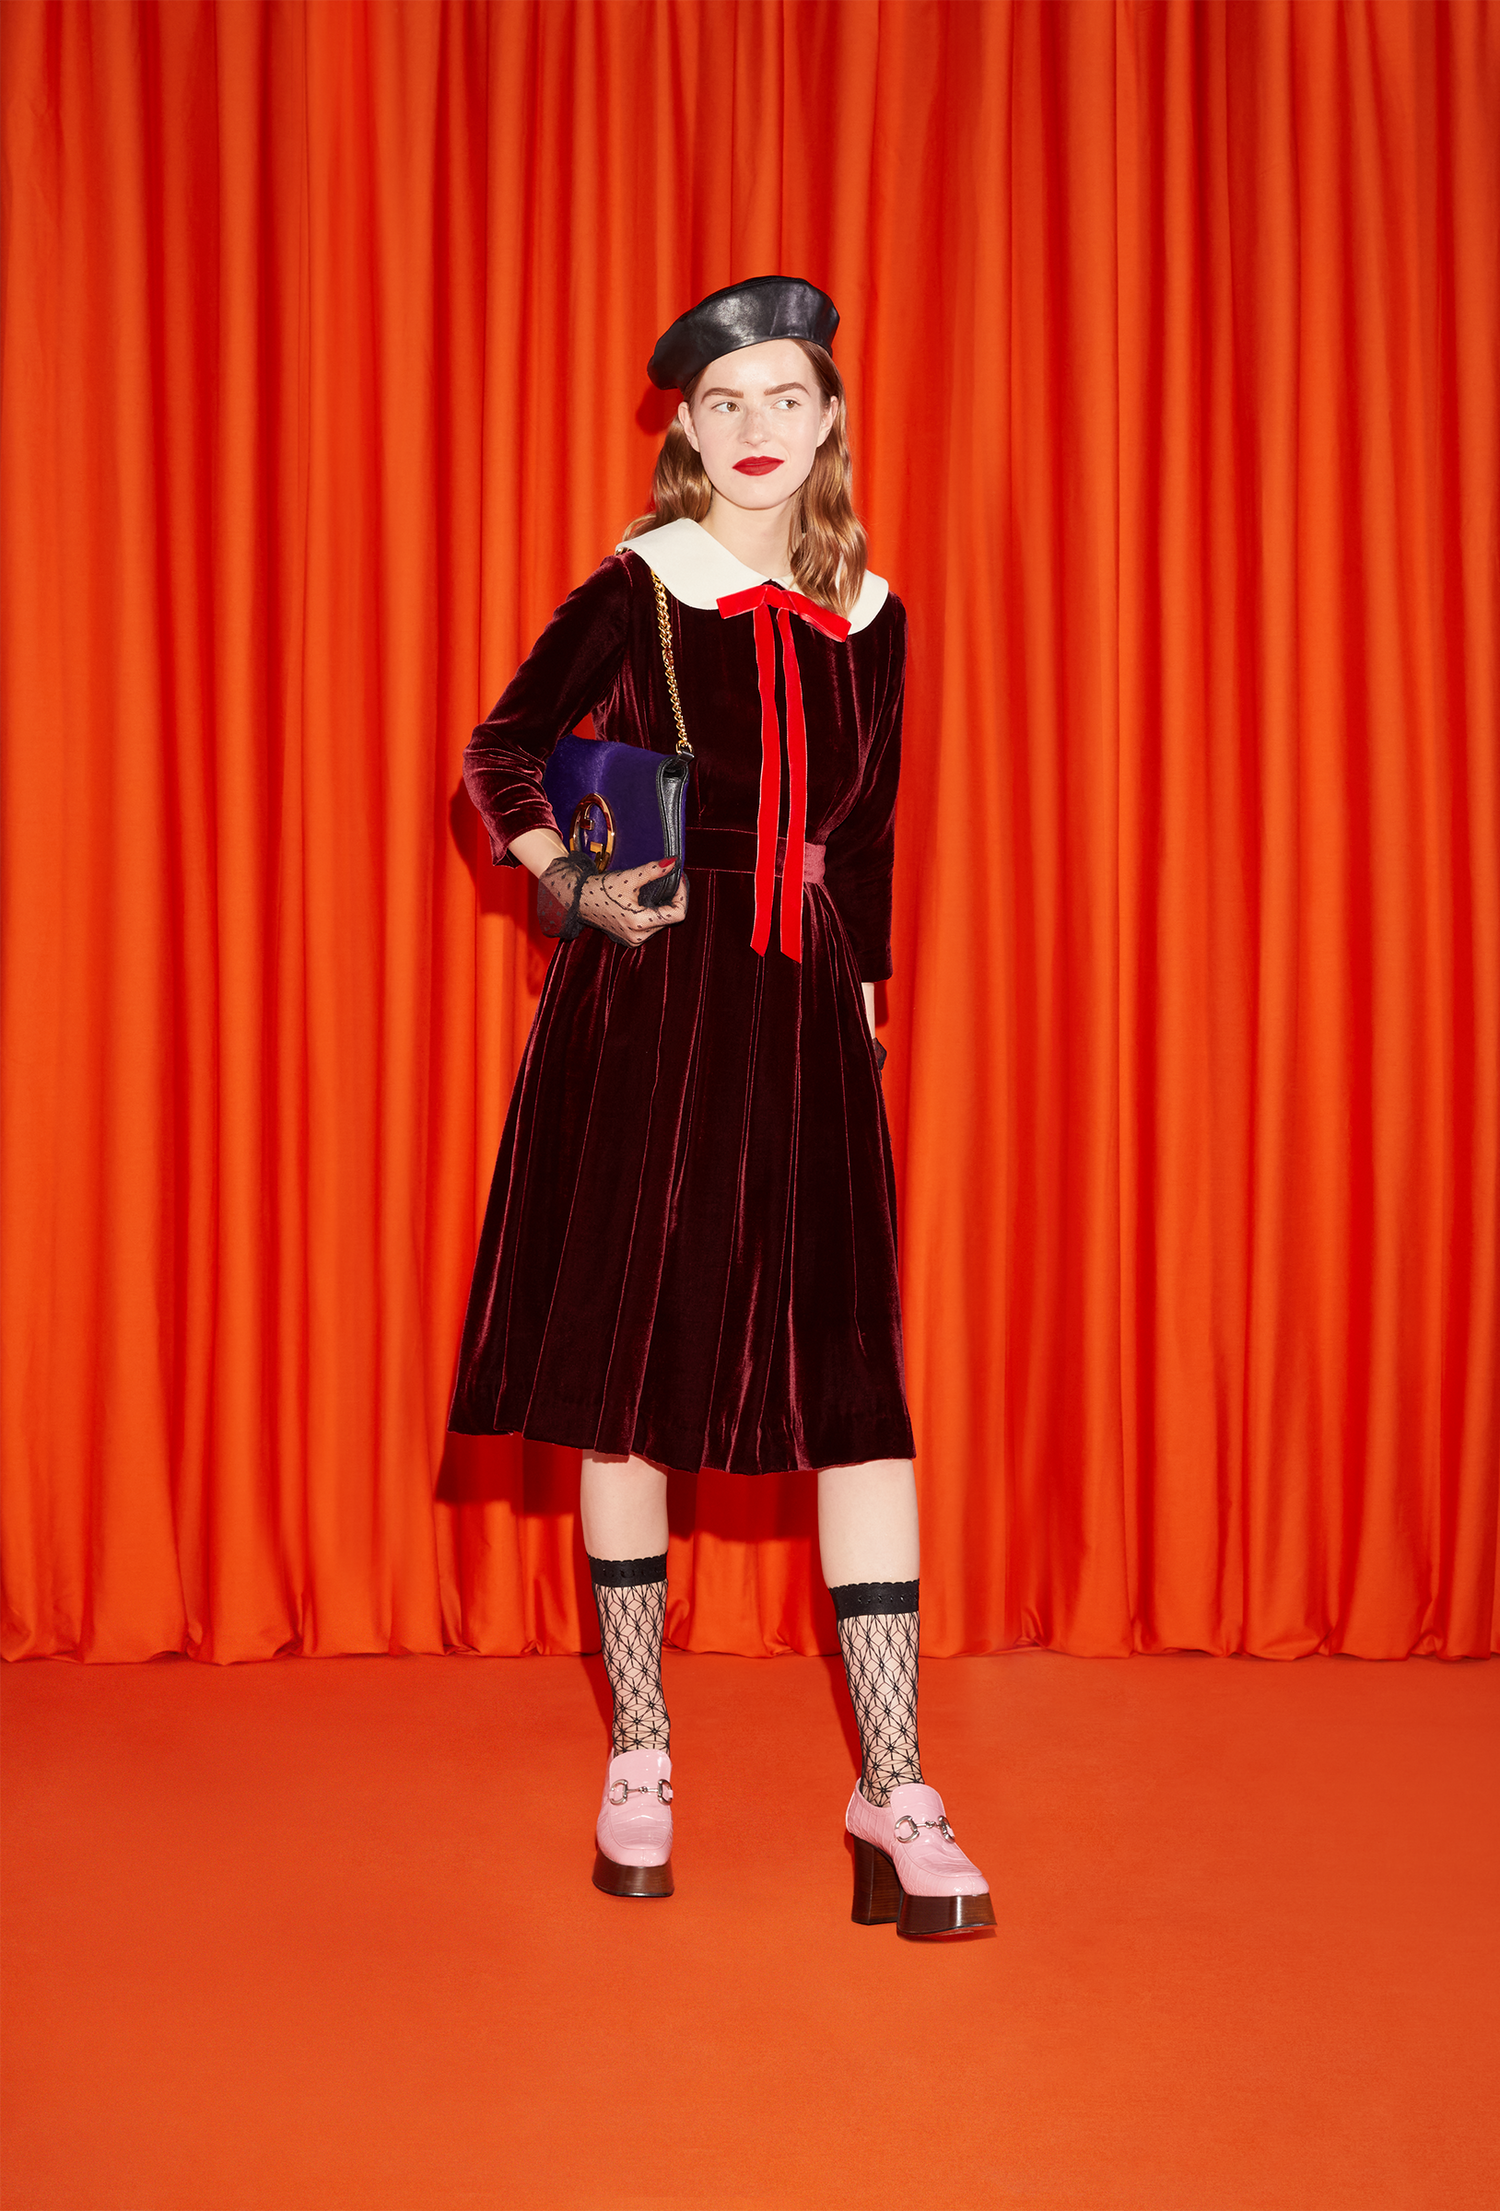 Model wearing a burgundy velvet dress, mesh stockings and matching white shoes.